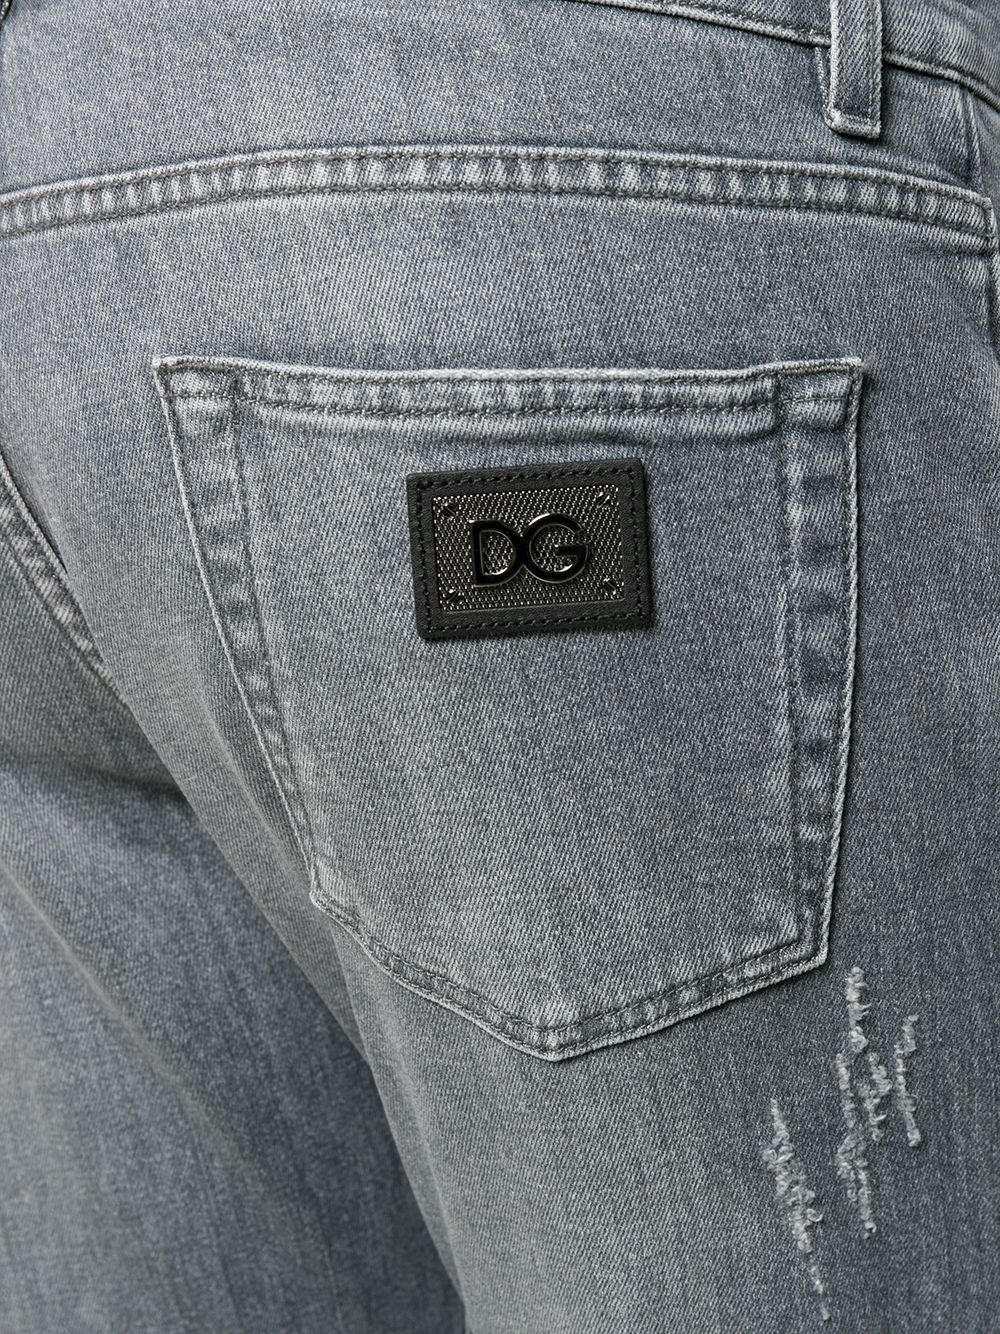 фото Dolce & gabbana джинсы кроя слим